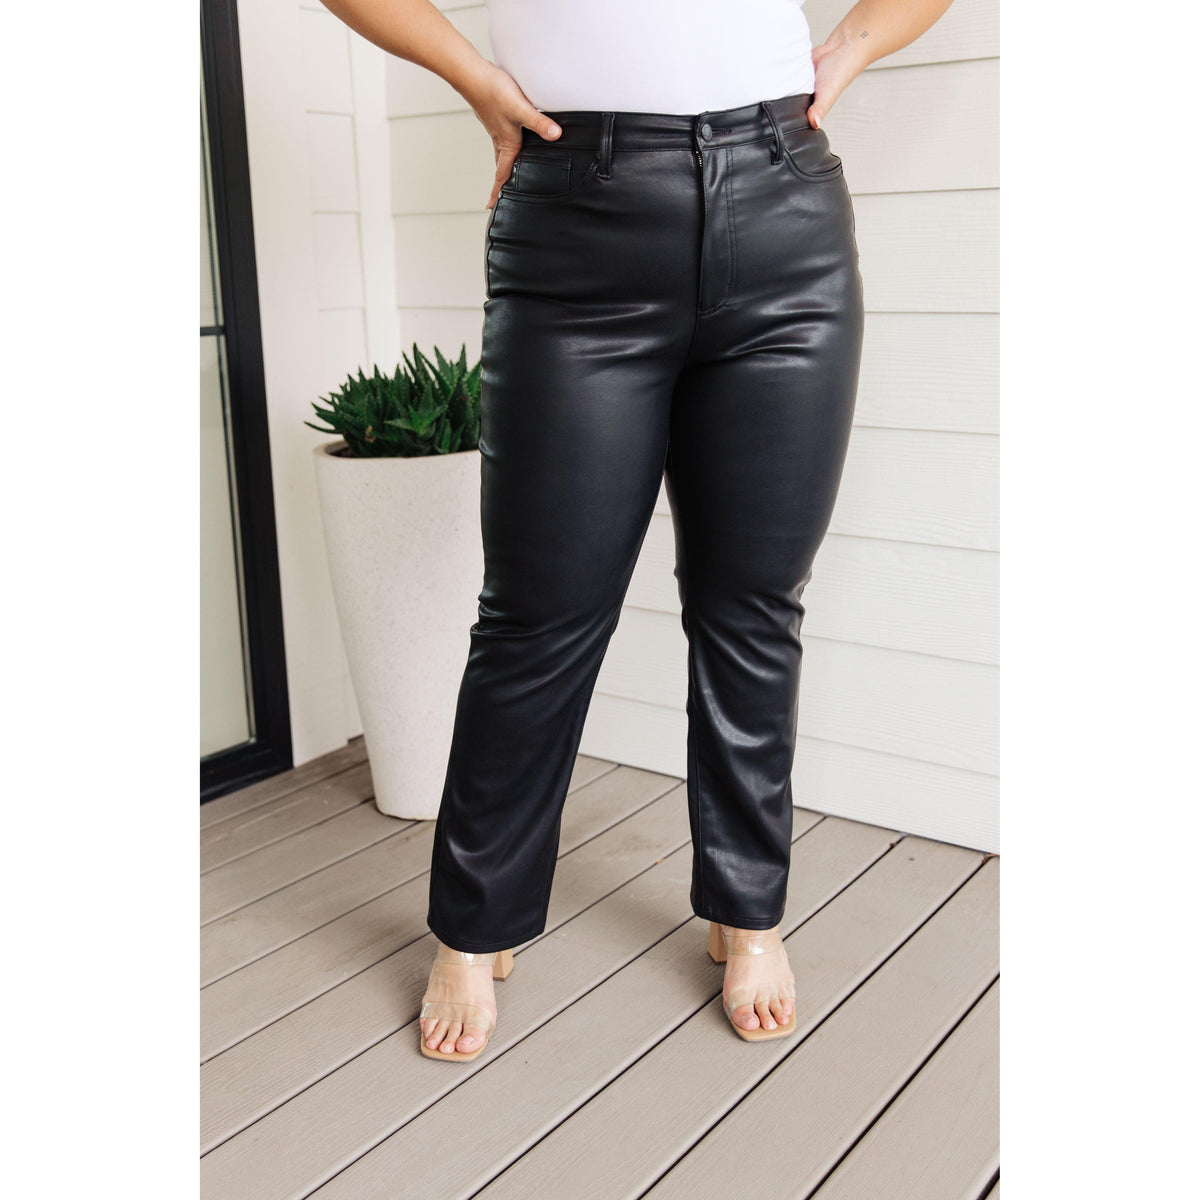 Judy Blue | Tanya Control Top Faux Leather Pants in Black - becauseofadi